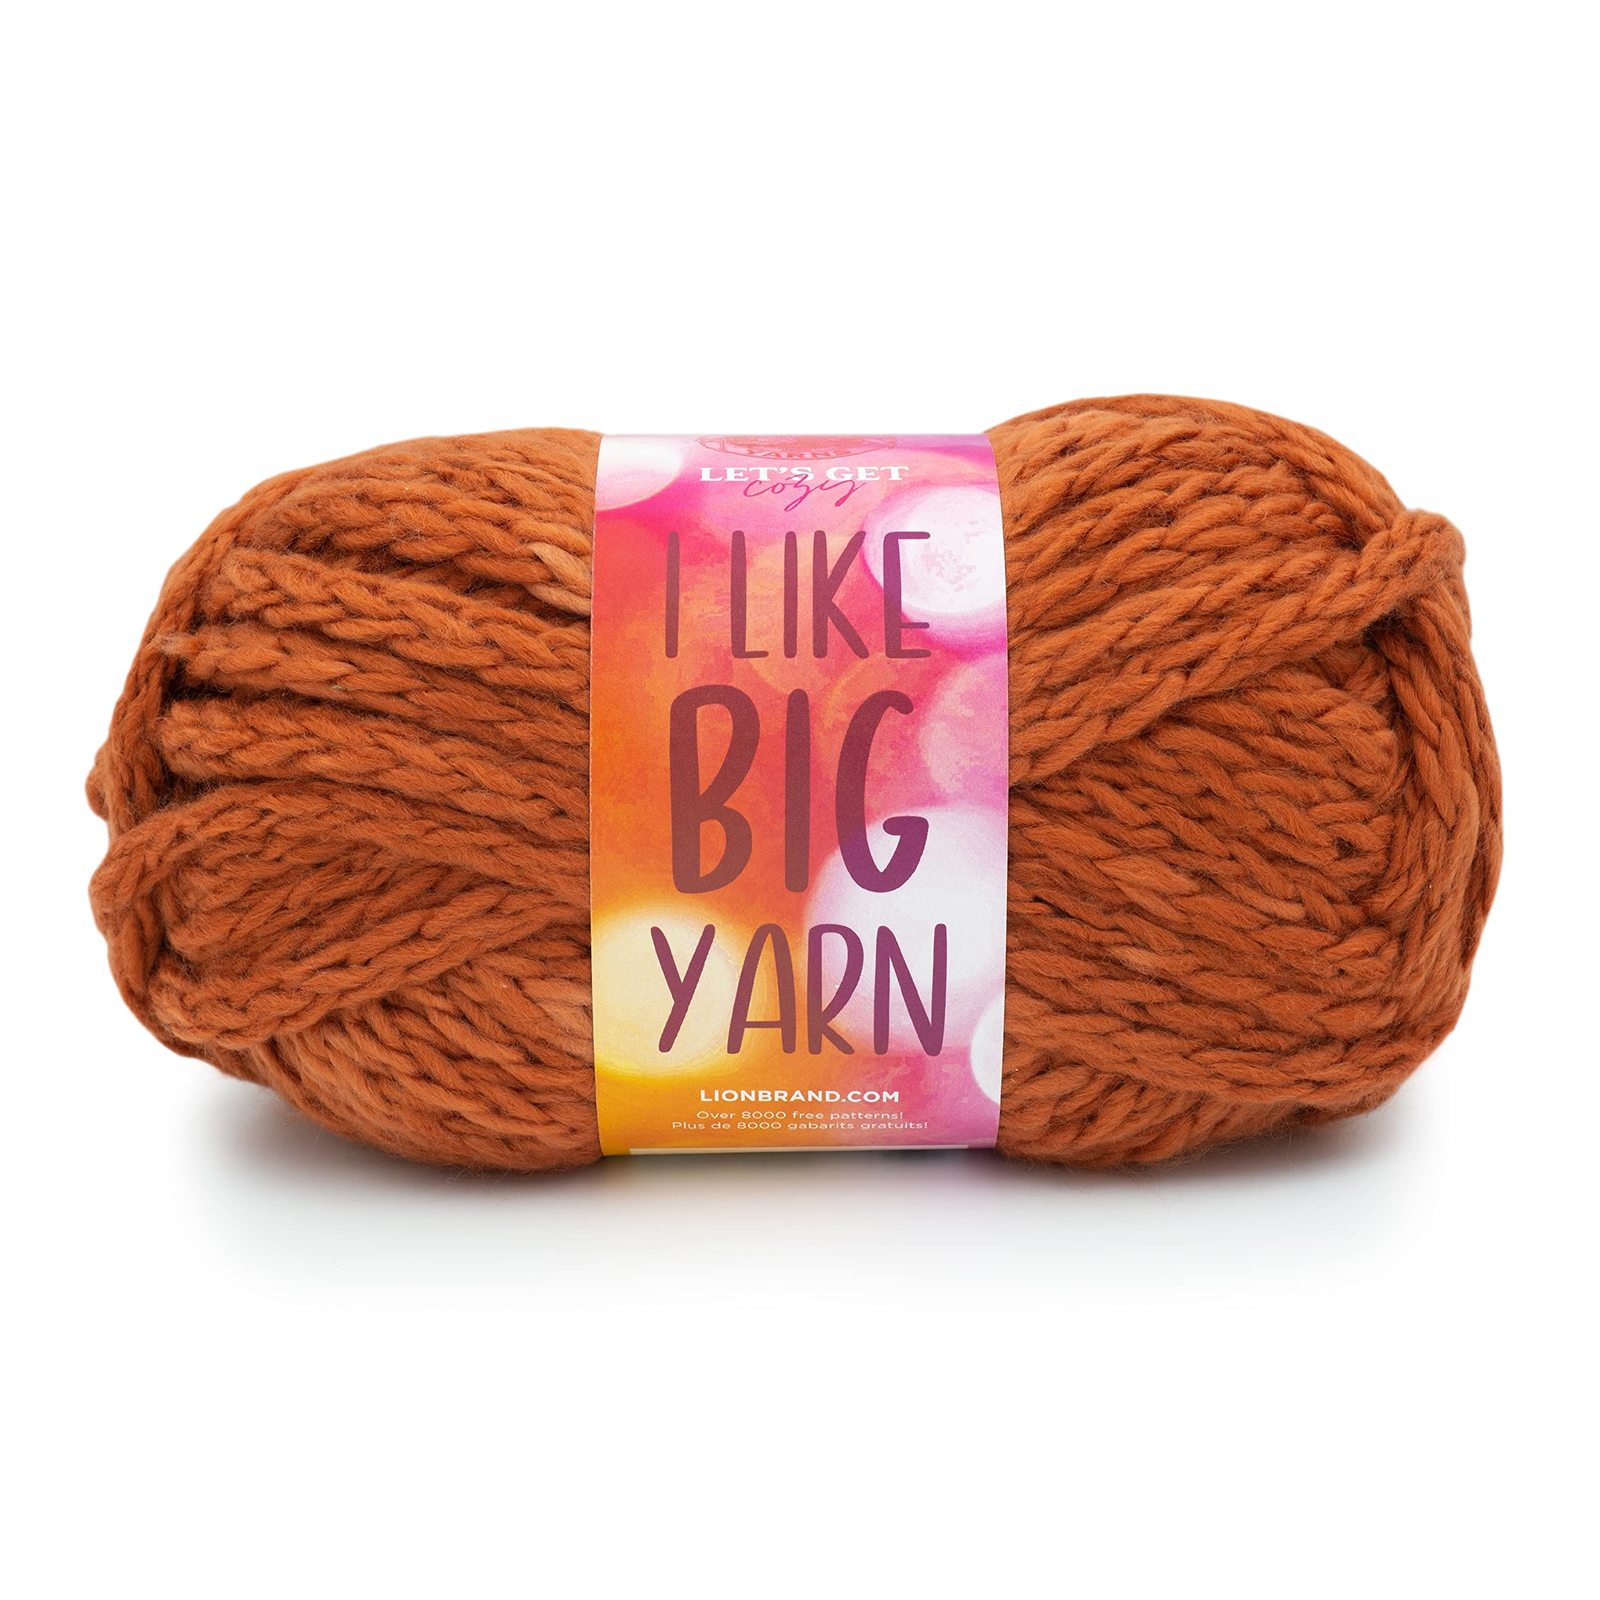 Lion Brand Yarn I Like Big Yarn, Marmalade - $14.99